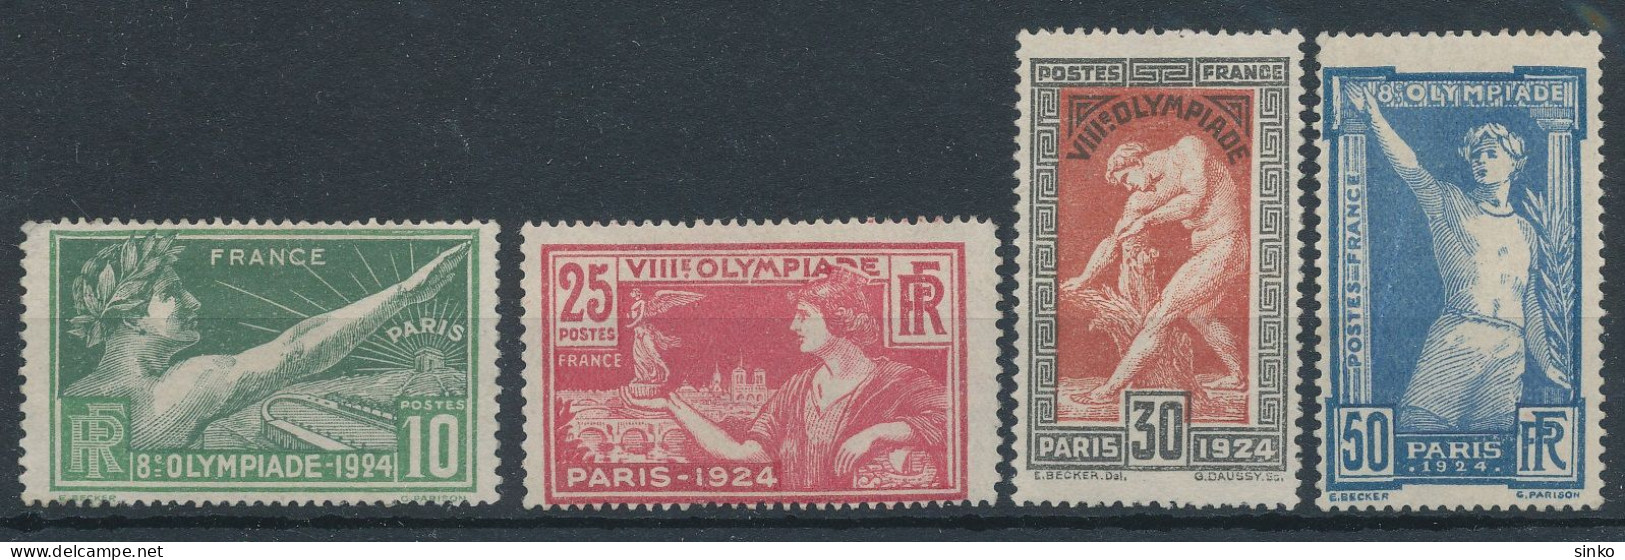 1924. France - Olympics - Verano 1924: Paris